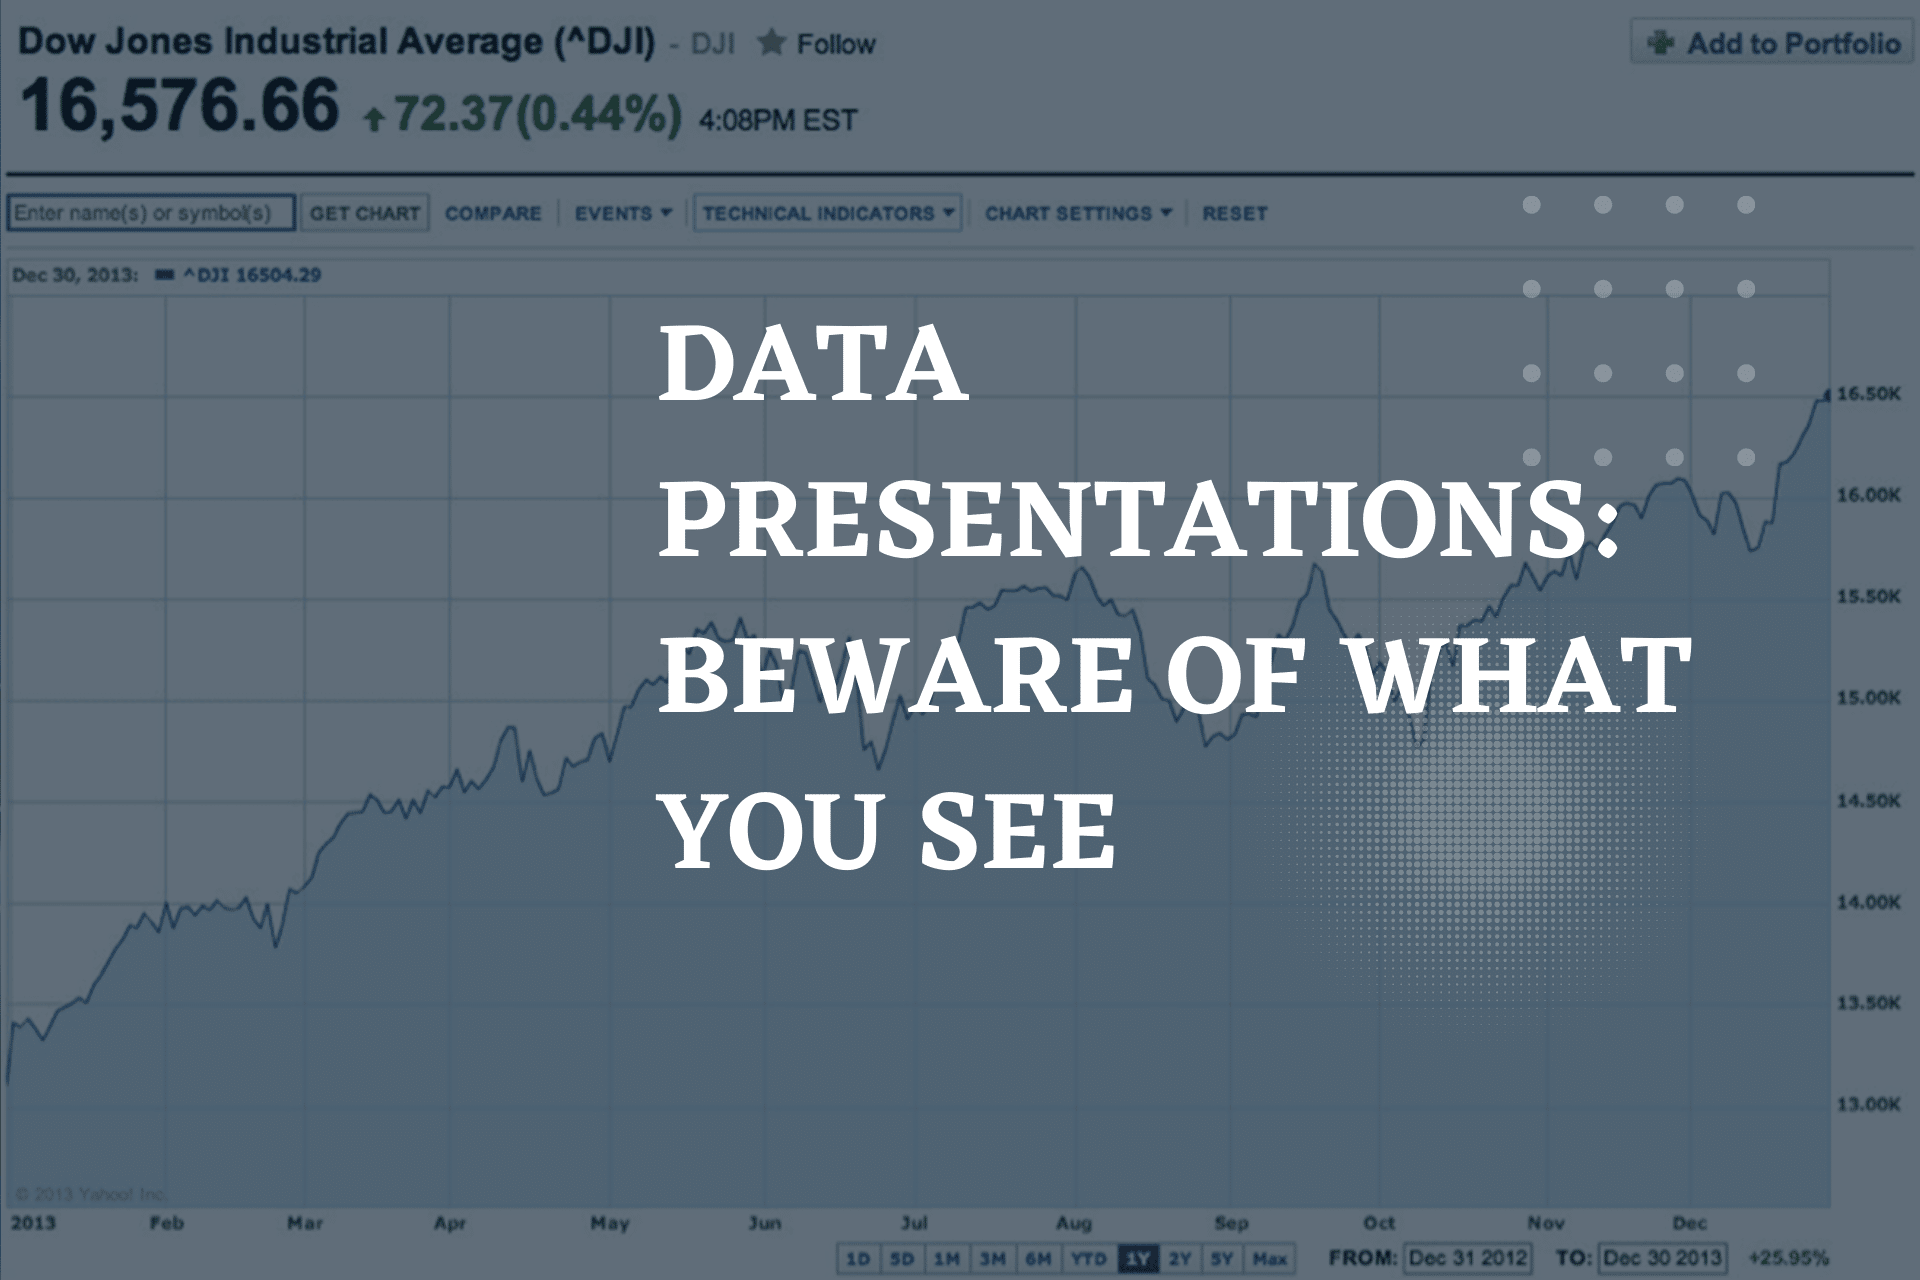 Data Presentations Beware of what you seeData Presentations Beware of what you see